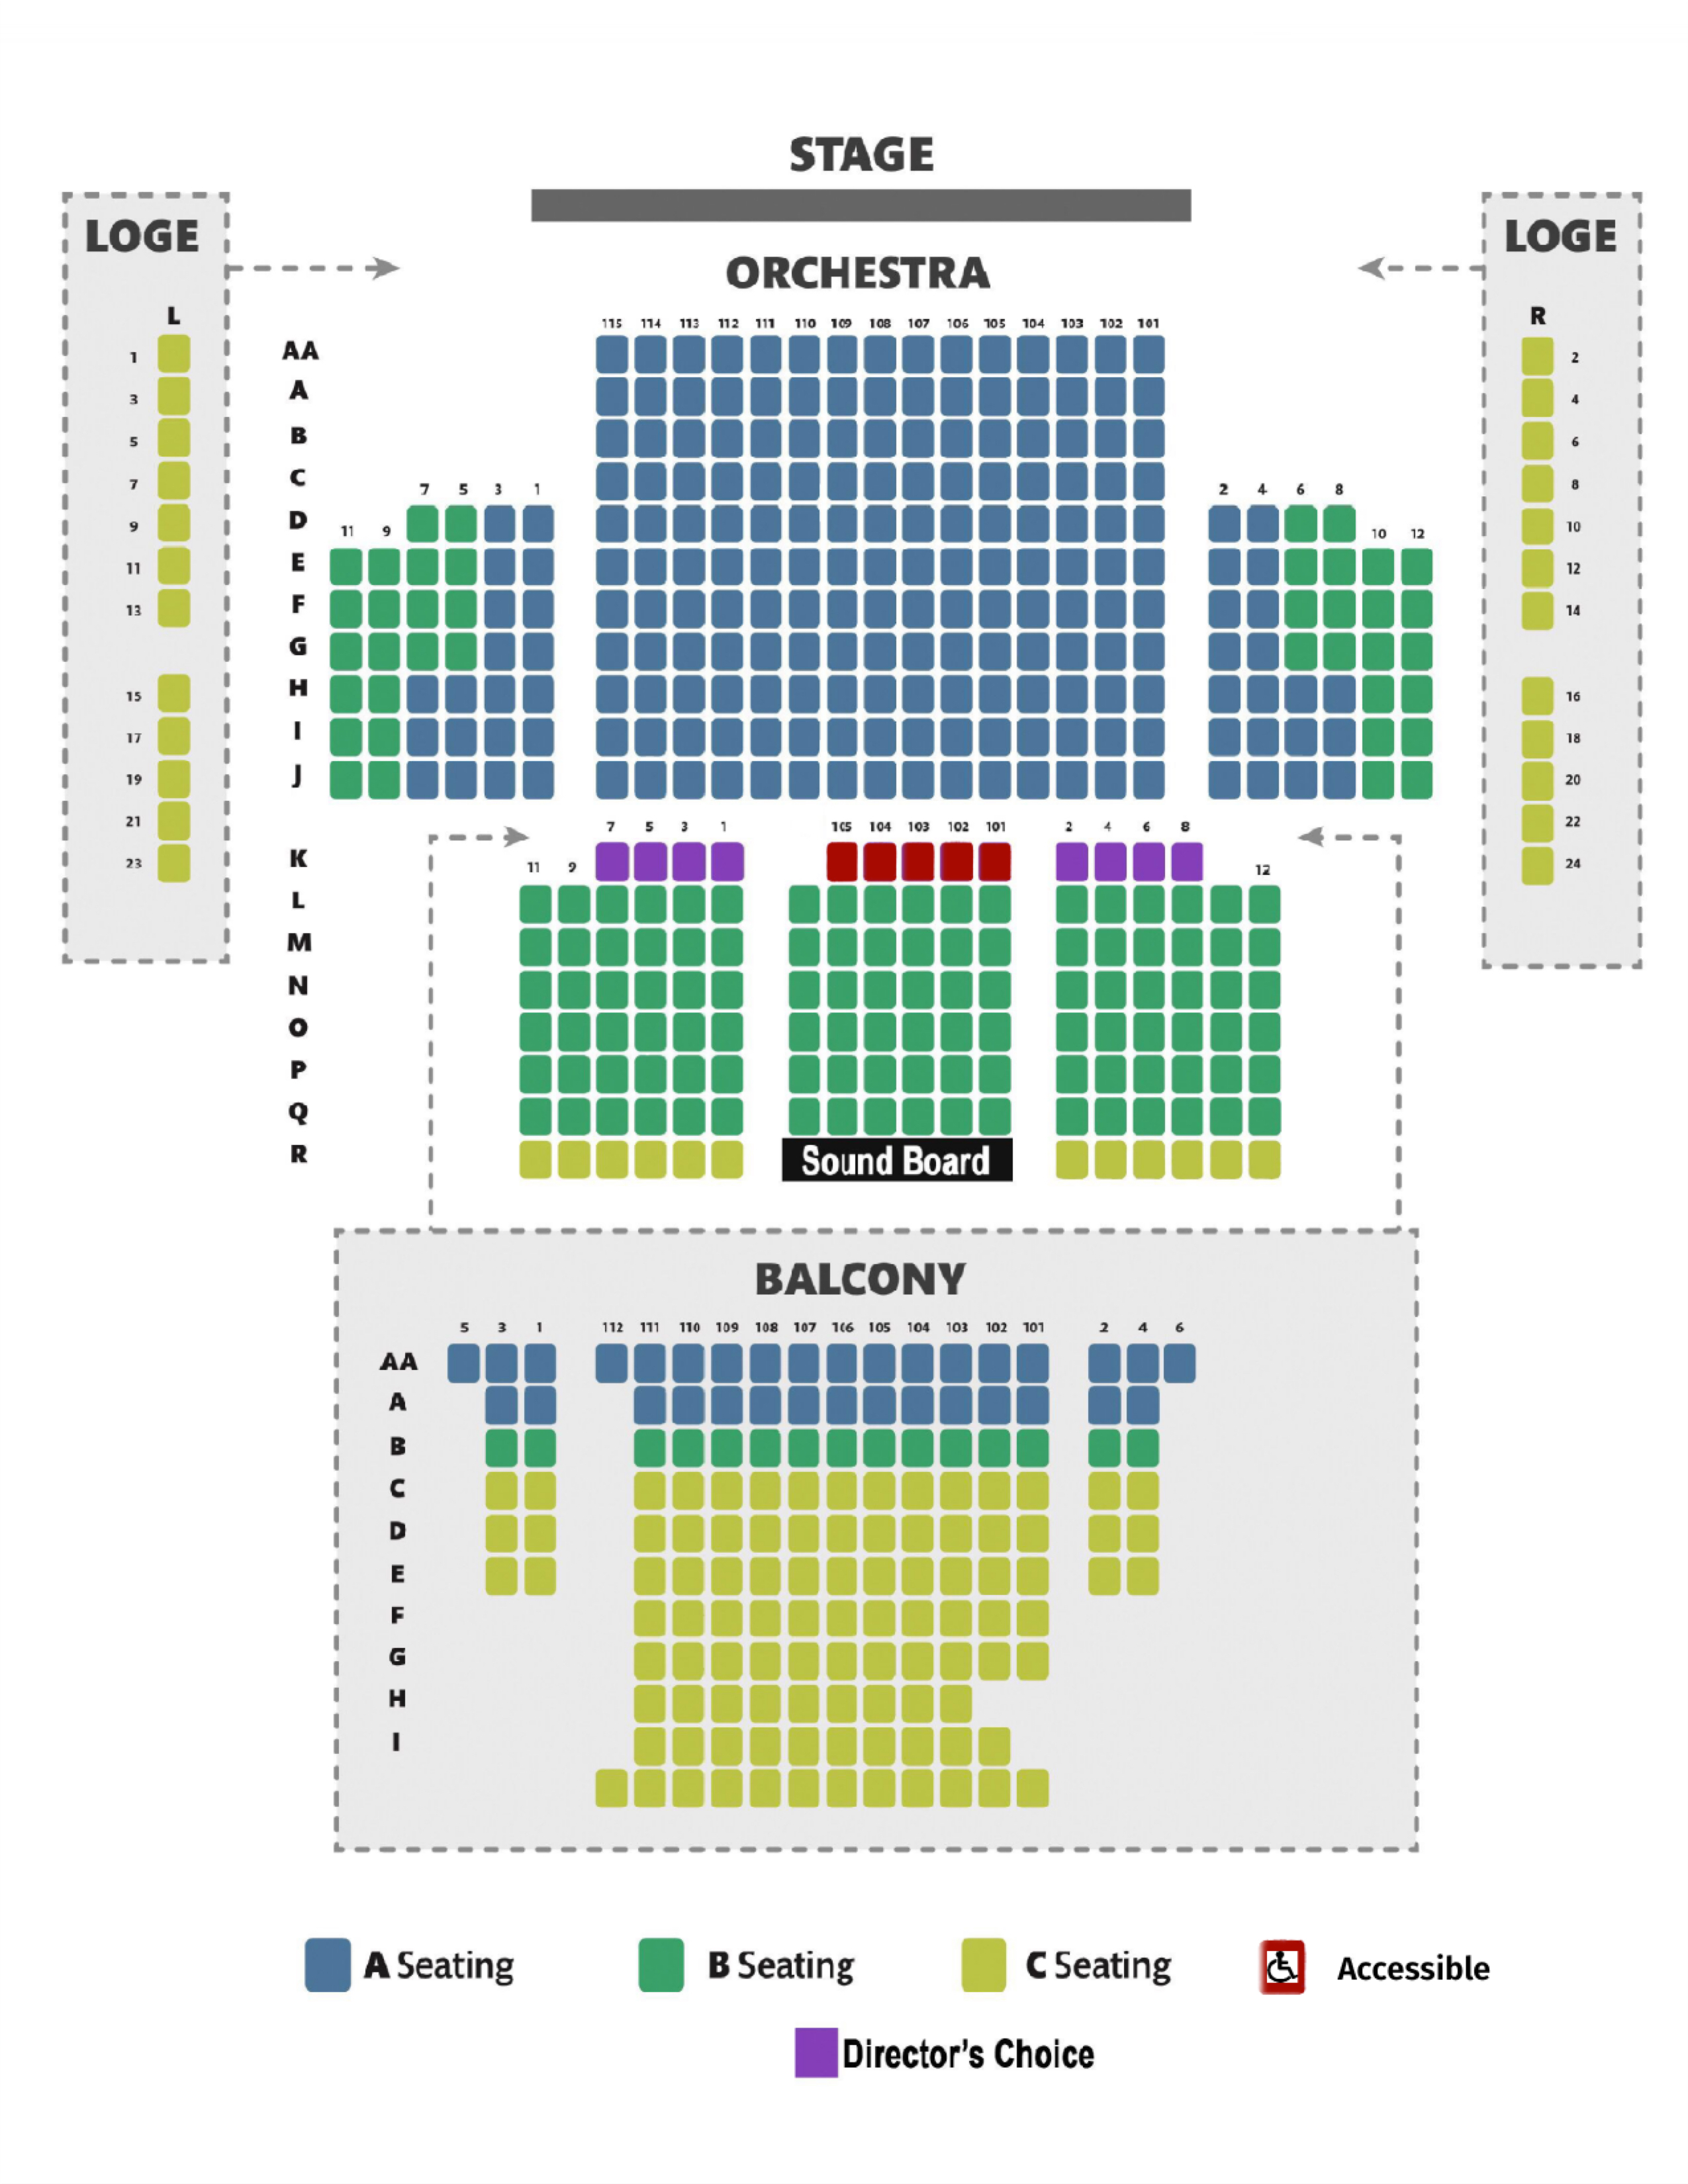 Million Dollar Theater Seating Chart